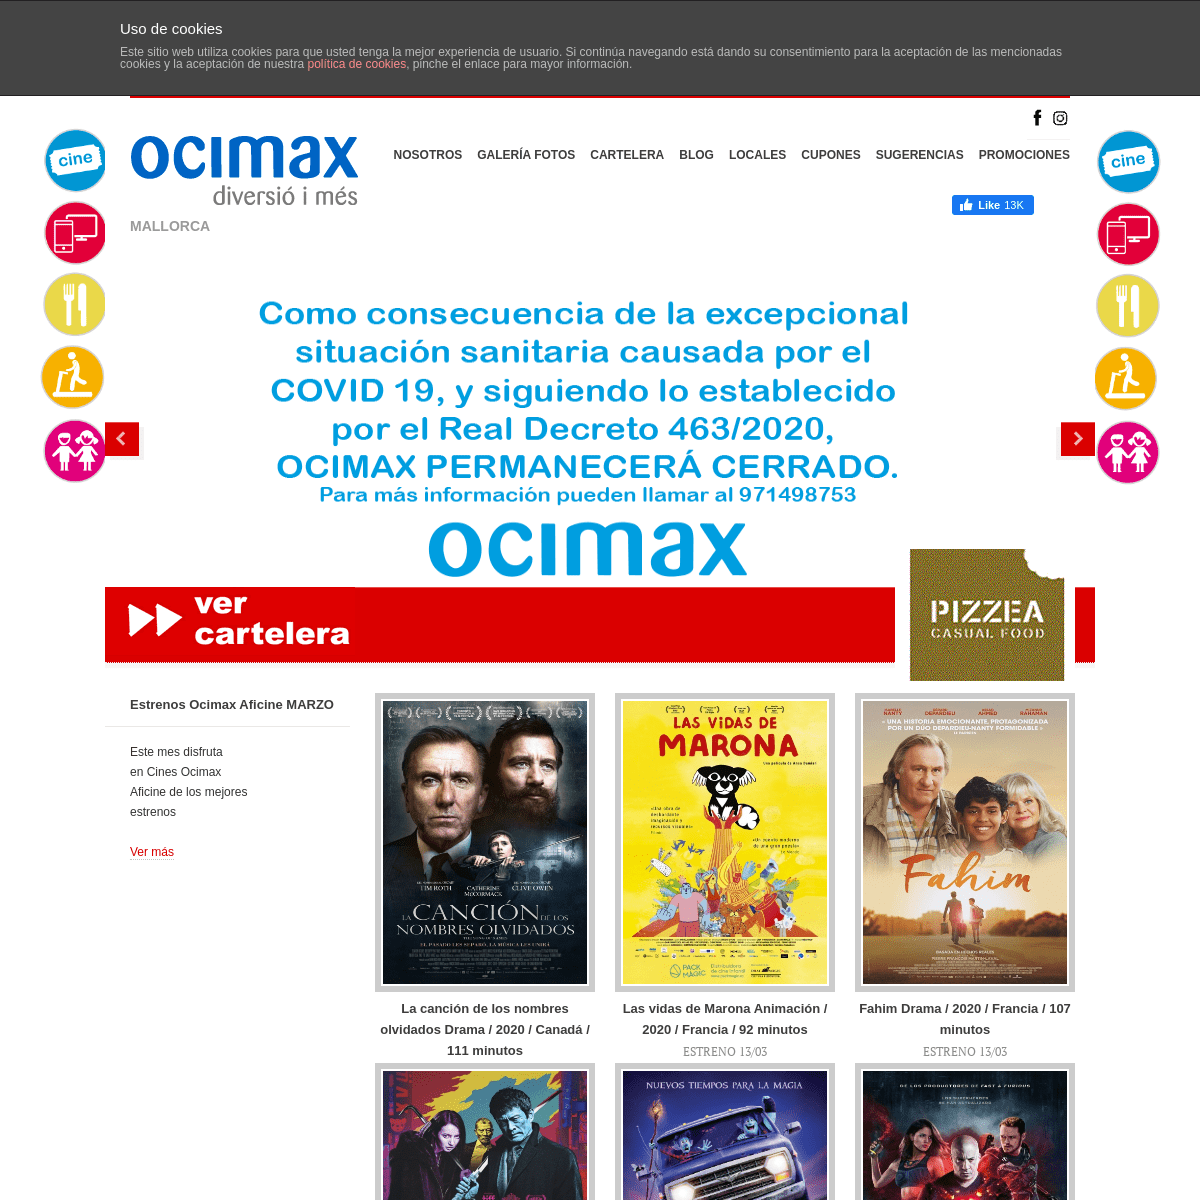 A complete backup of ocimax.com